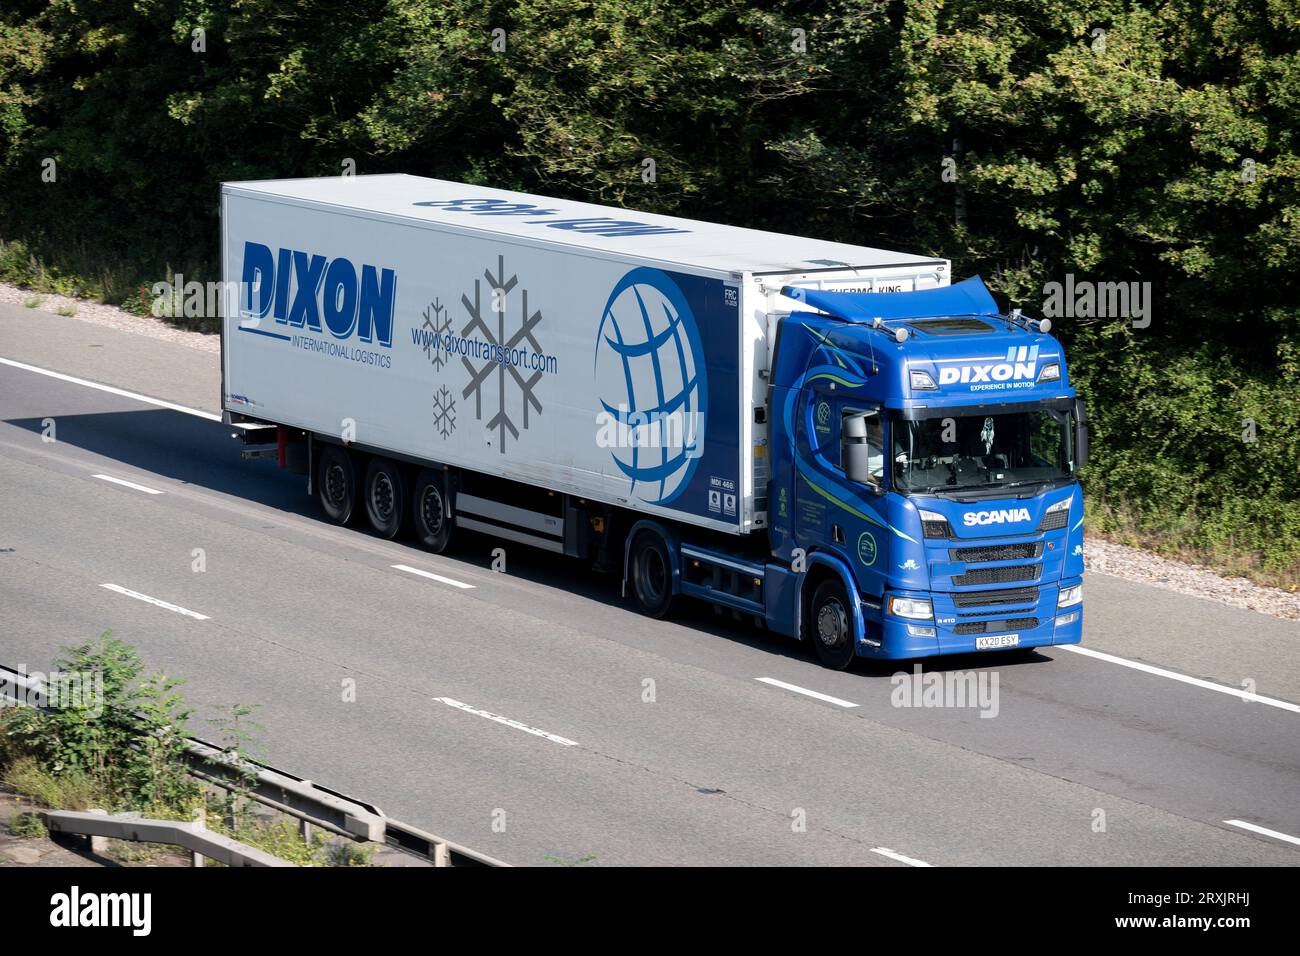 Dixon International Logistics lorry on the M40 motorway, Warwickshire, UK Stock Photo